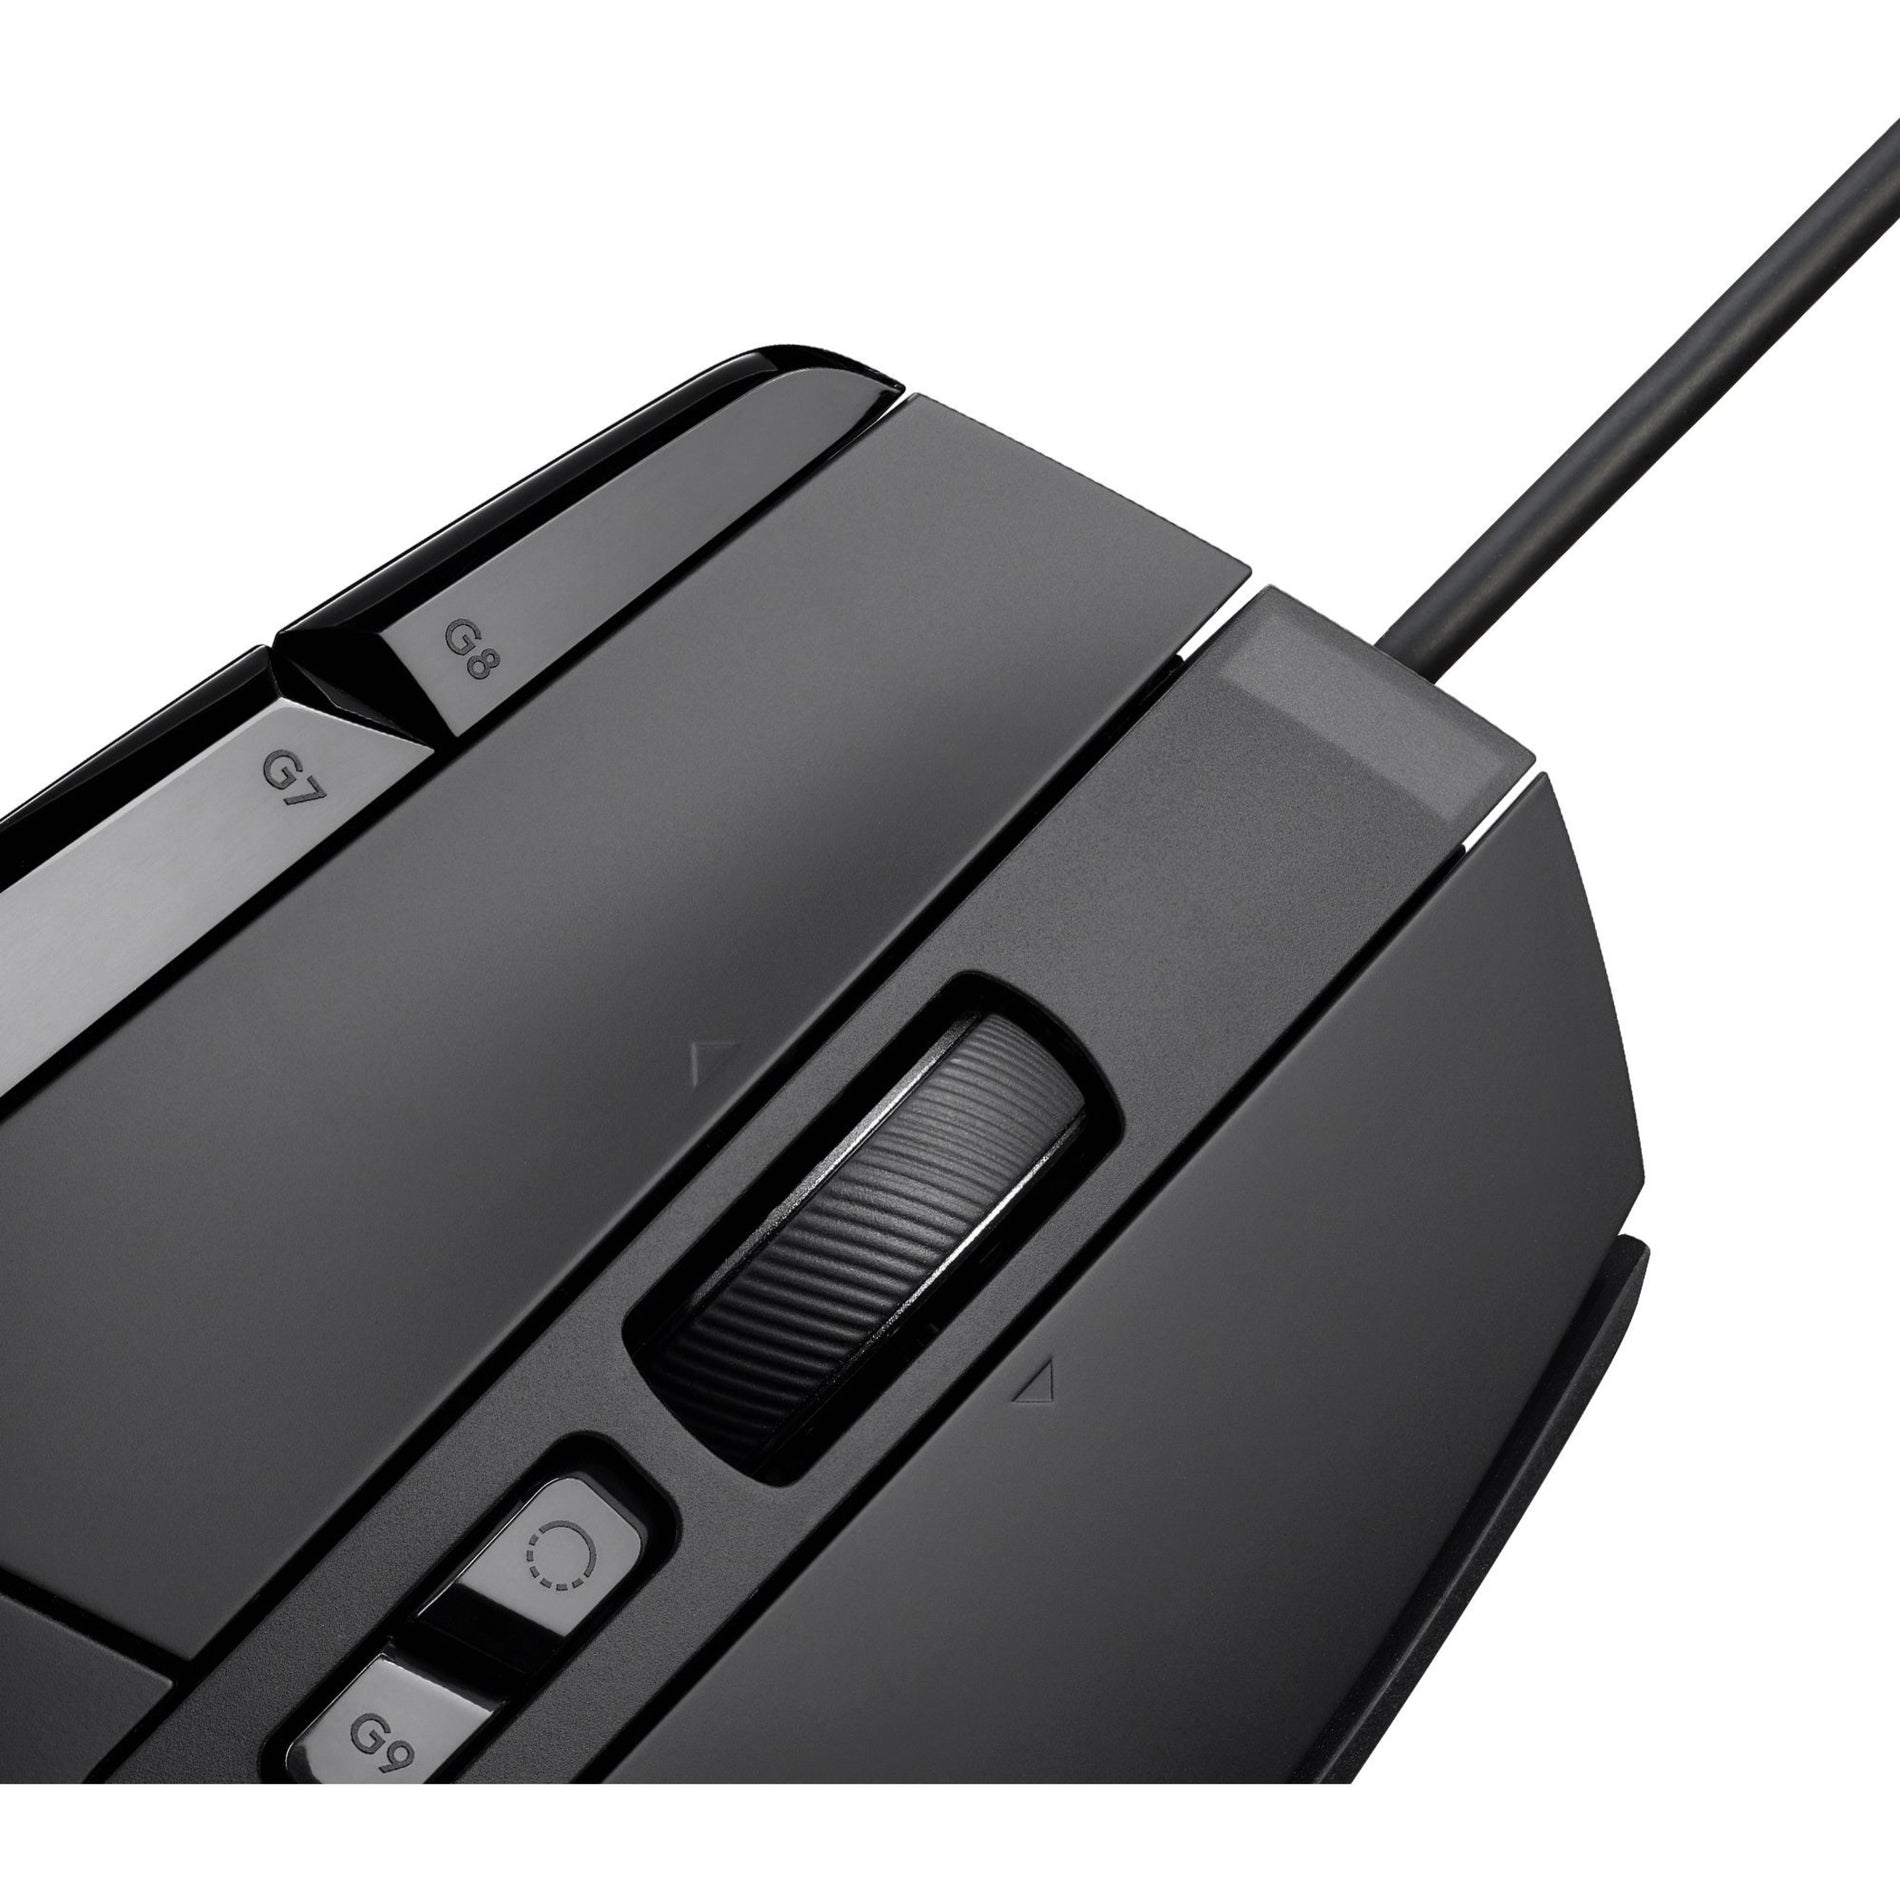 Logitech G 910-006136 G502 X Gaming Mouse, High Precision Optical Sensor, 25600 DPI, USB Wired, 2 Year Warranty